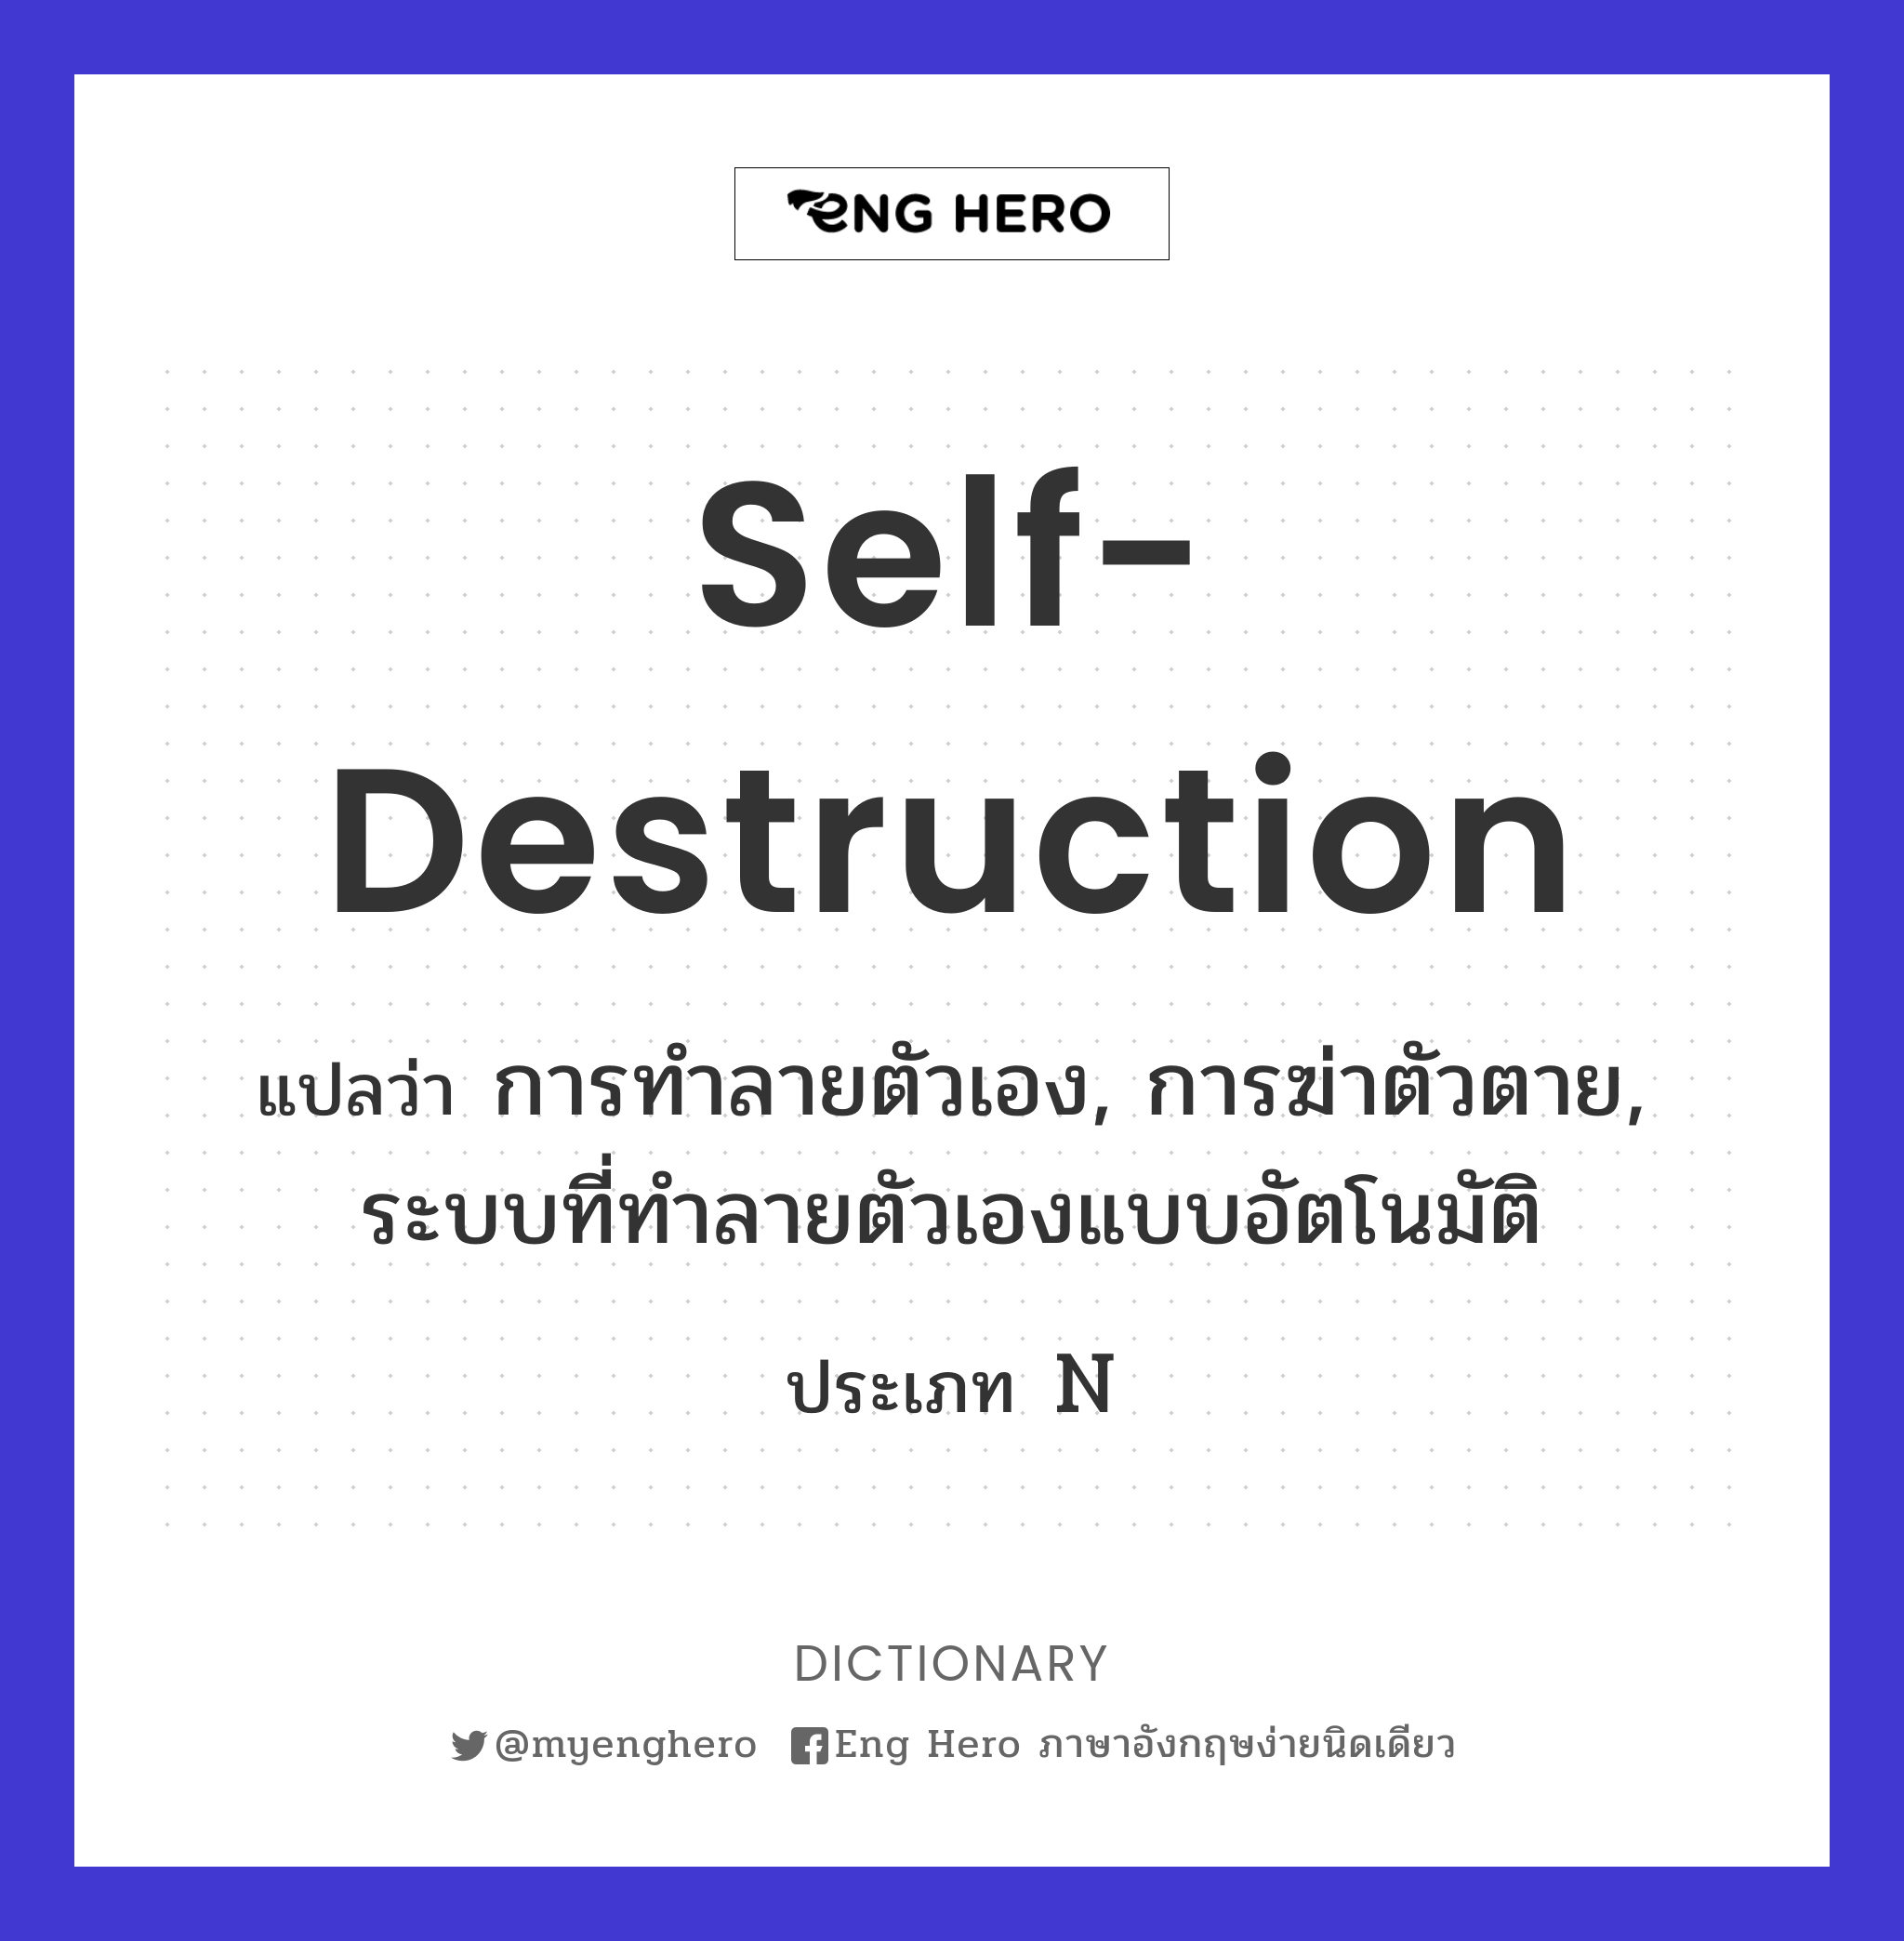 self-destruction